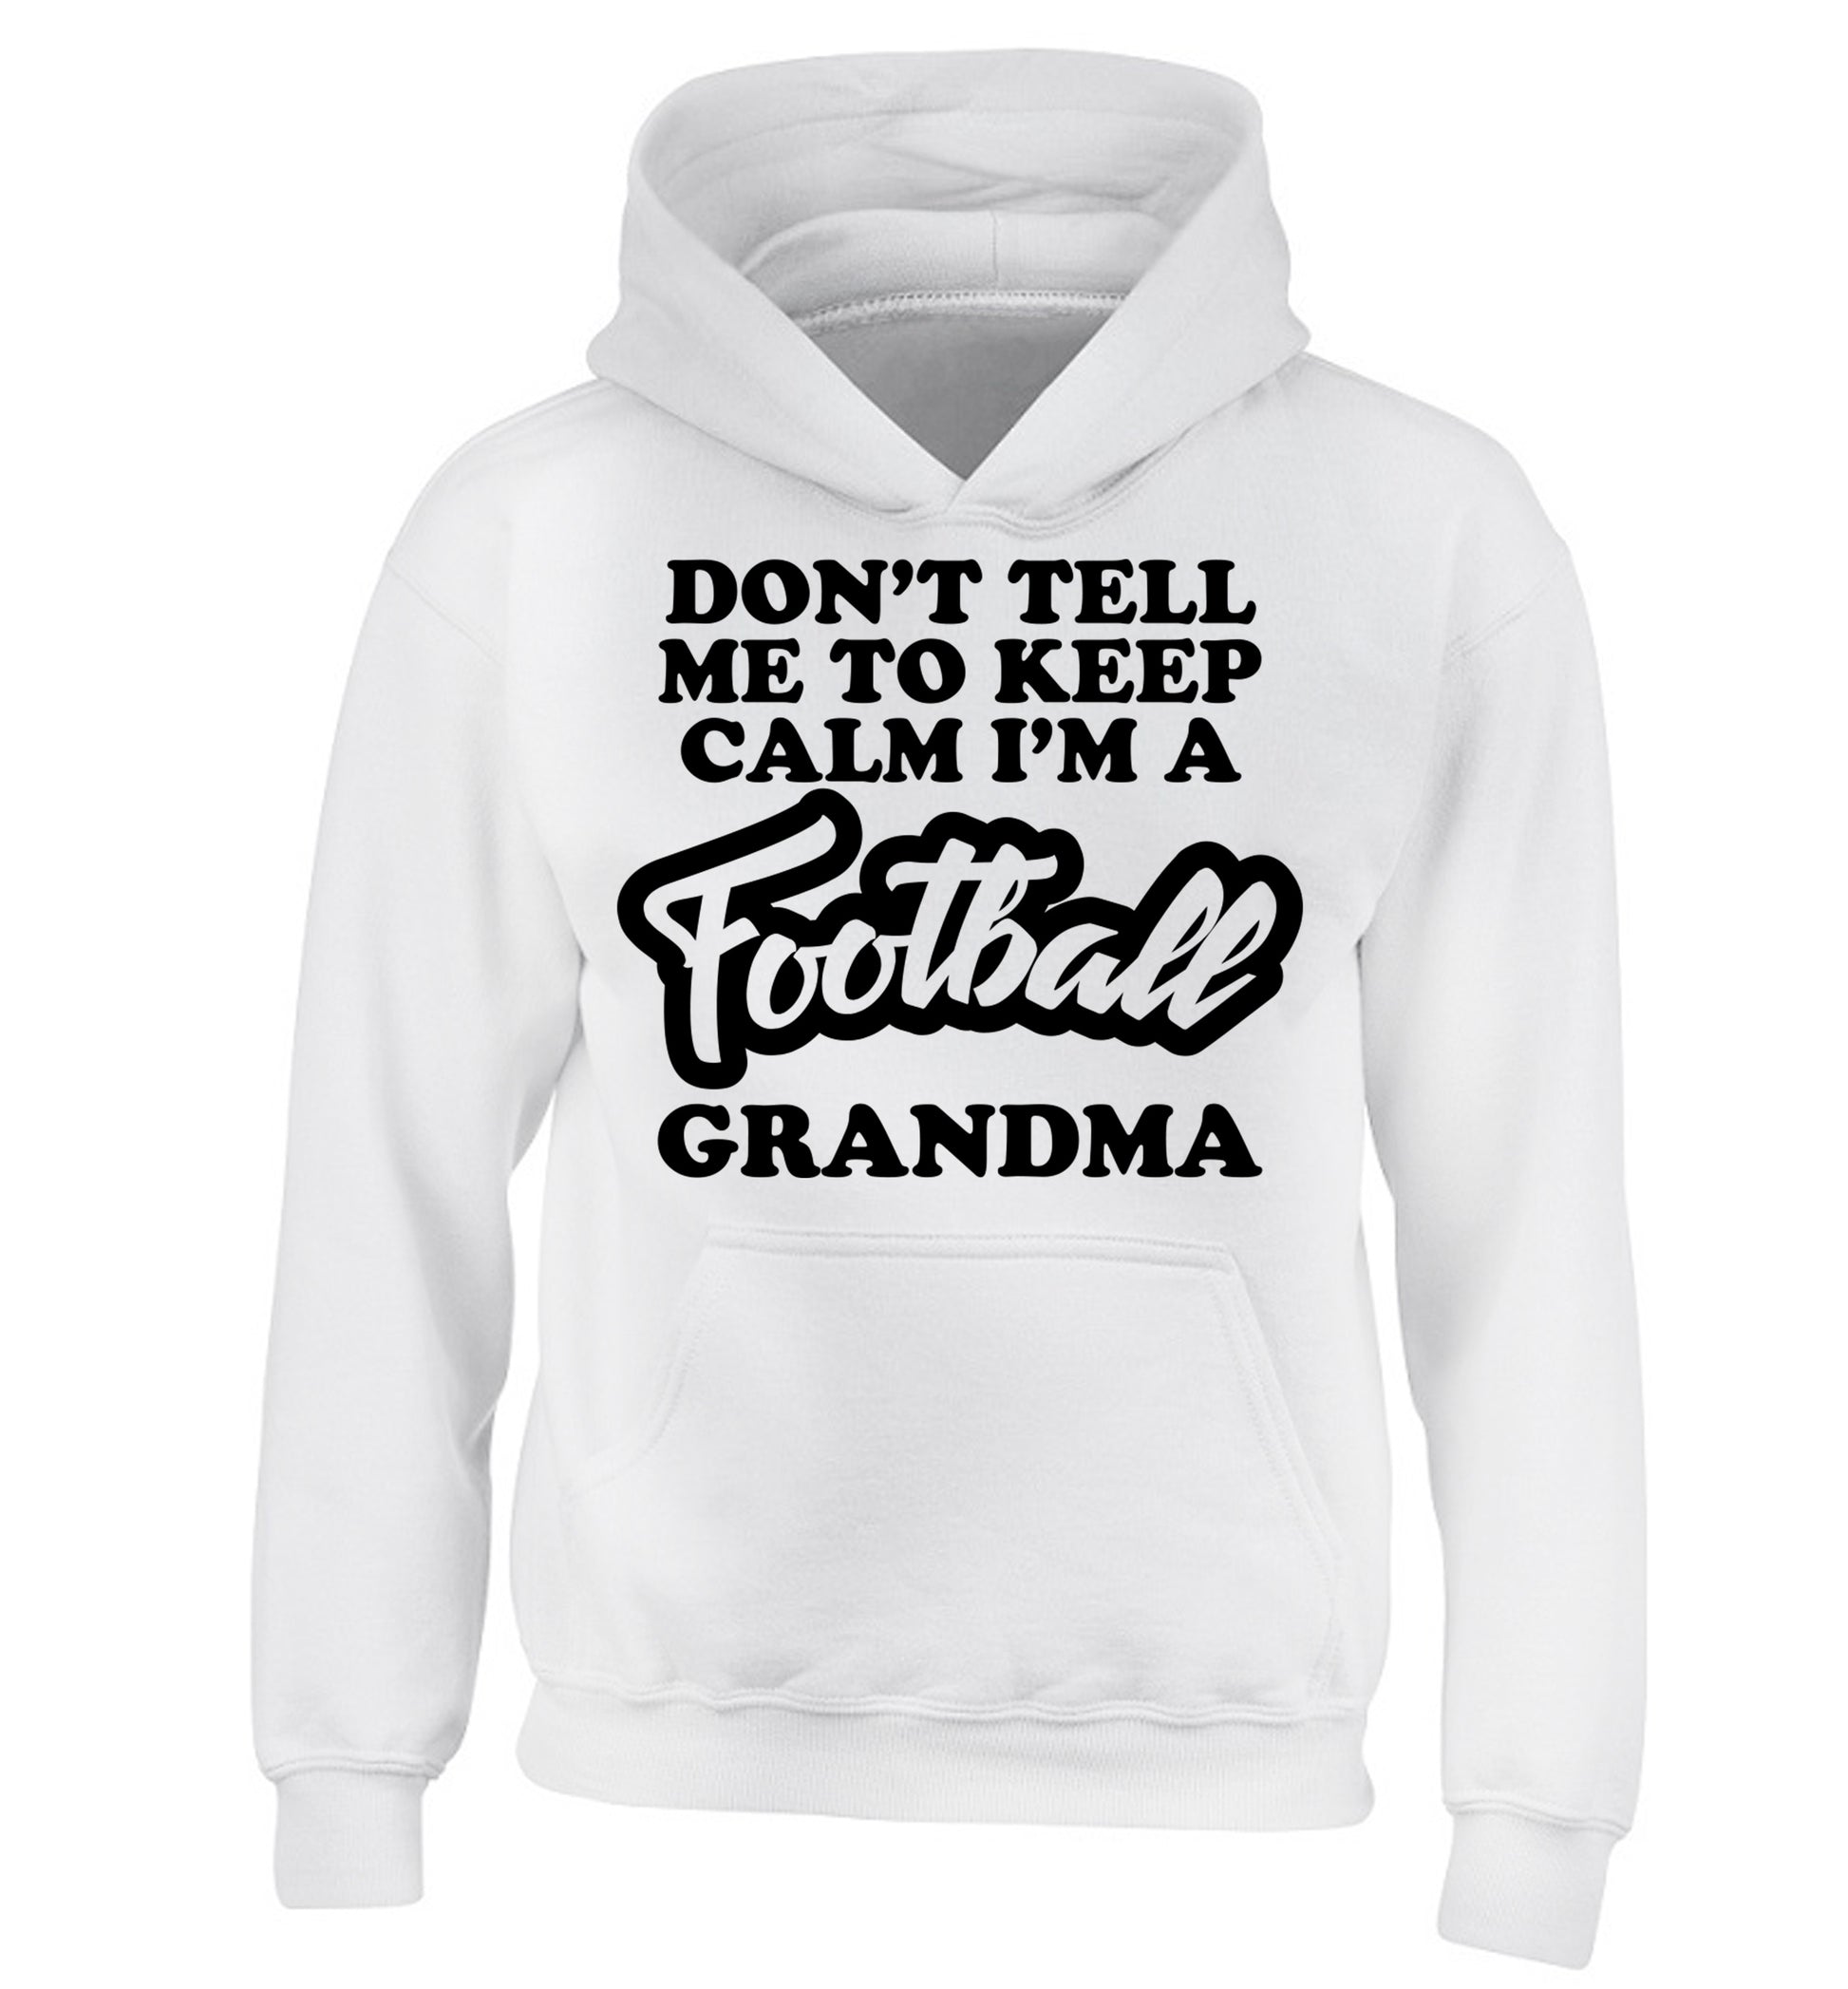 Don't tell me to keep calm I'm a football grandma children's white hoodie 12-14 Years